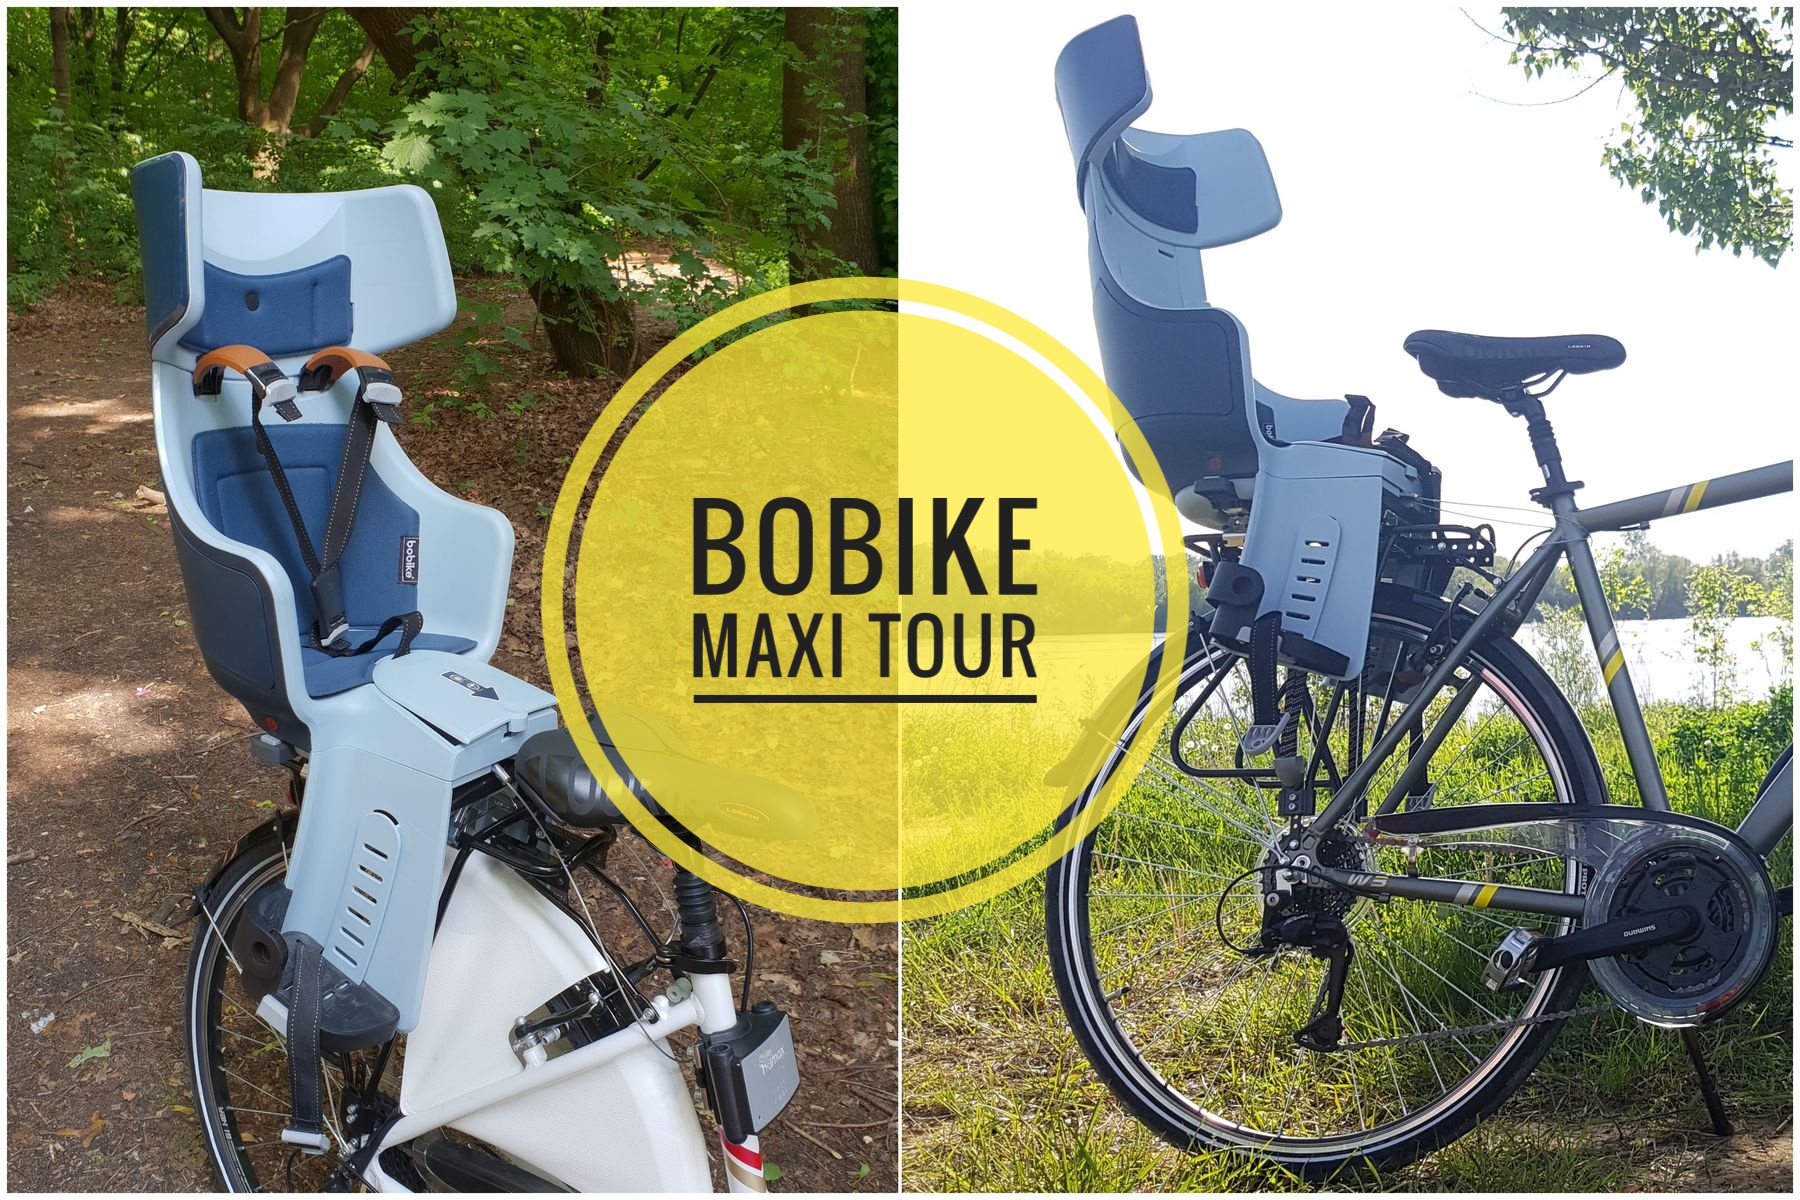 Bobike Maxi Tour